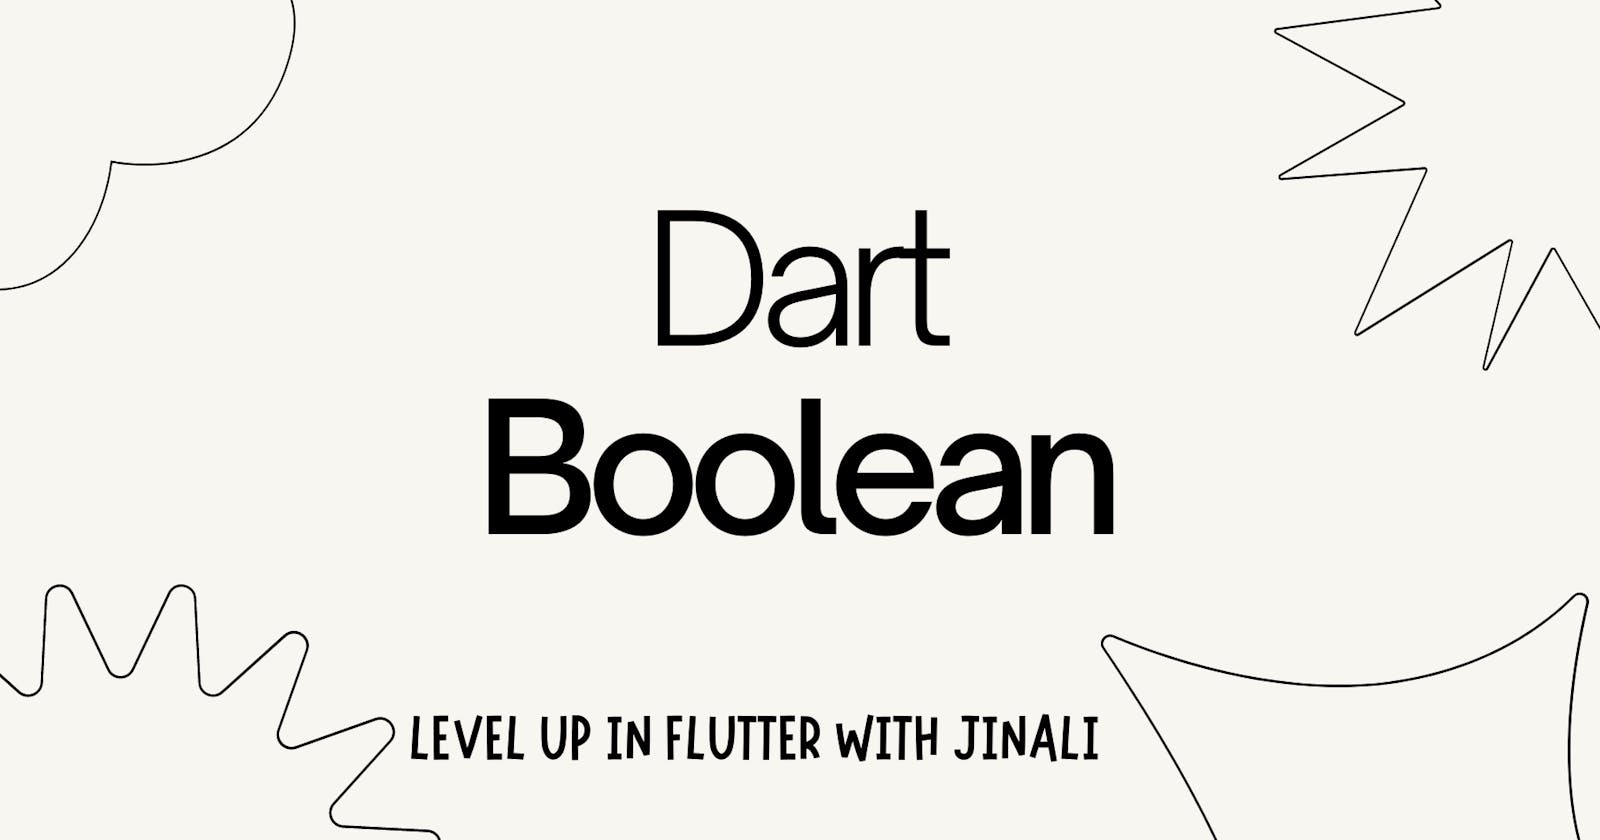 Dart Boolean